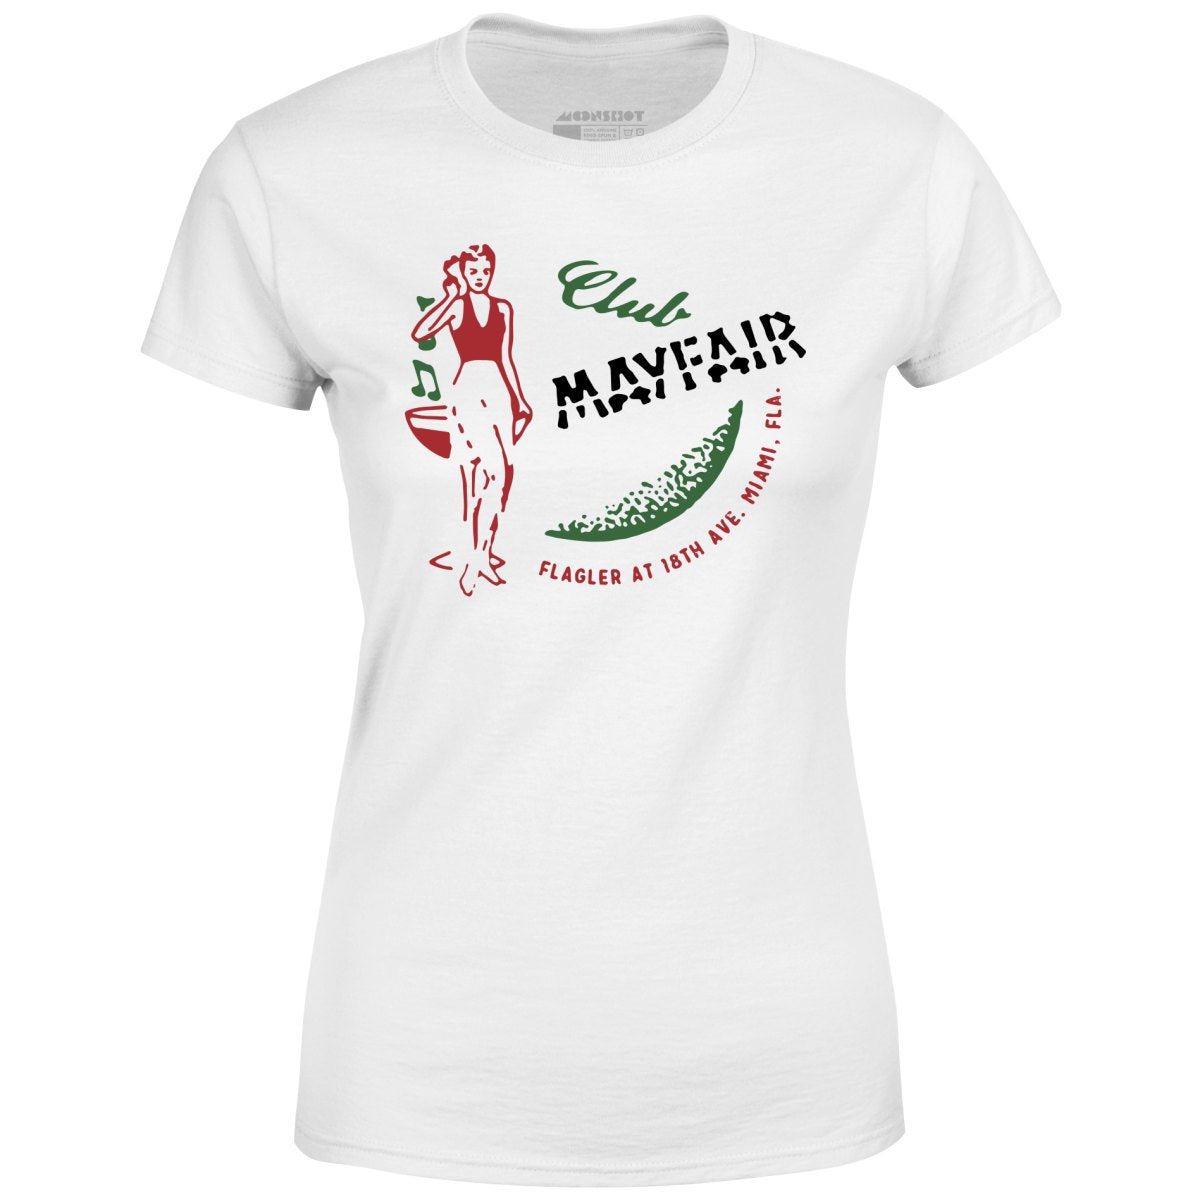 Club Mayfair - Miami, FL - Vintage Restaurant - Women's T-Shirt